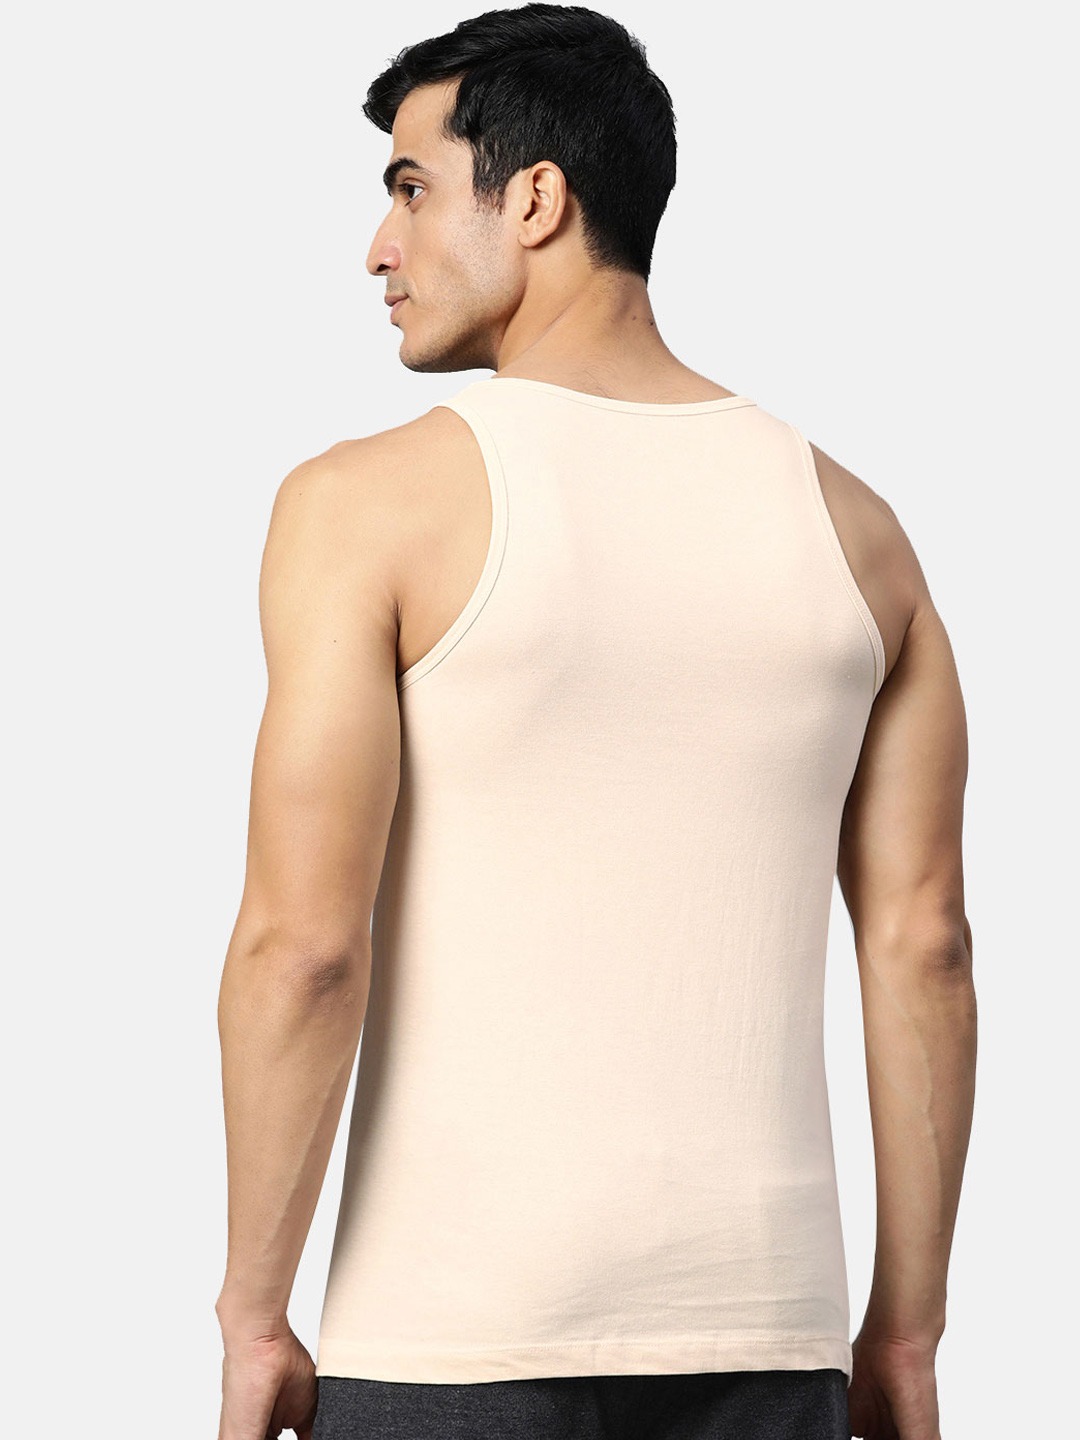 Clothing Innerwear Vests | Almo Wear Men Pack Of 3 Solid Slim-Fit Cotton Innerwear Vests - TH76565